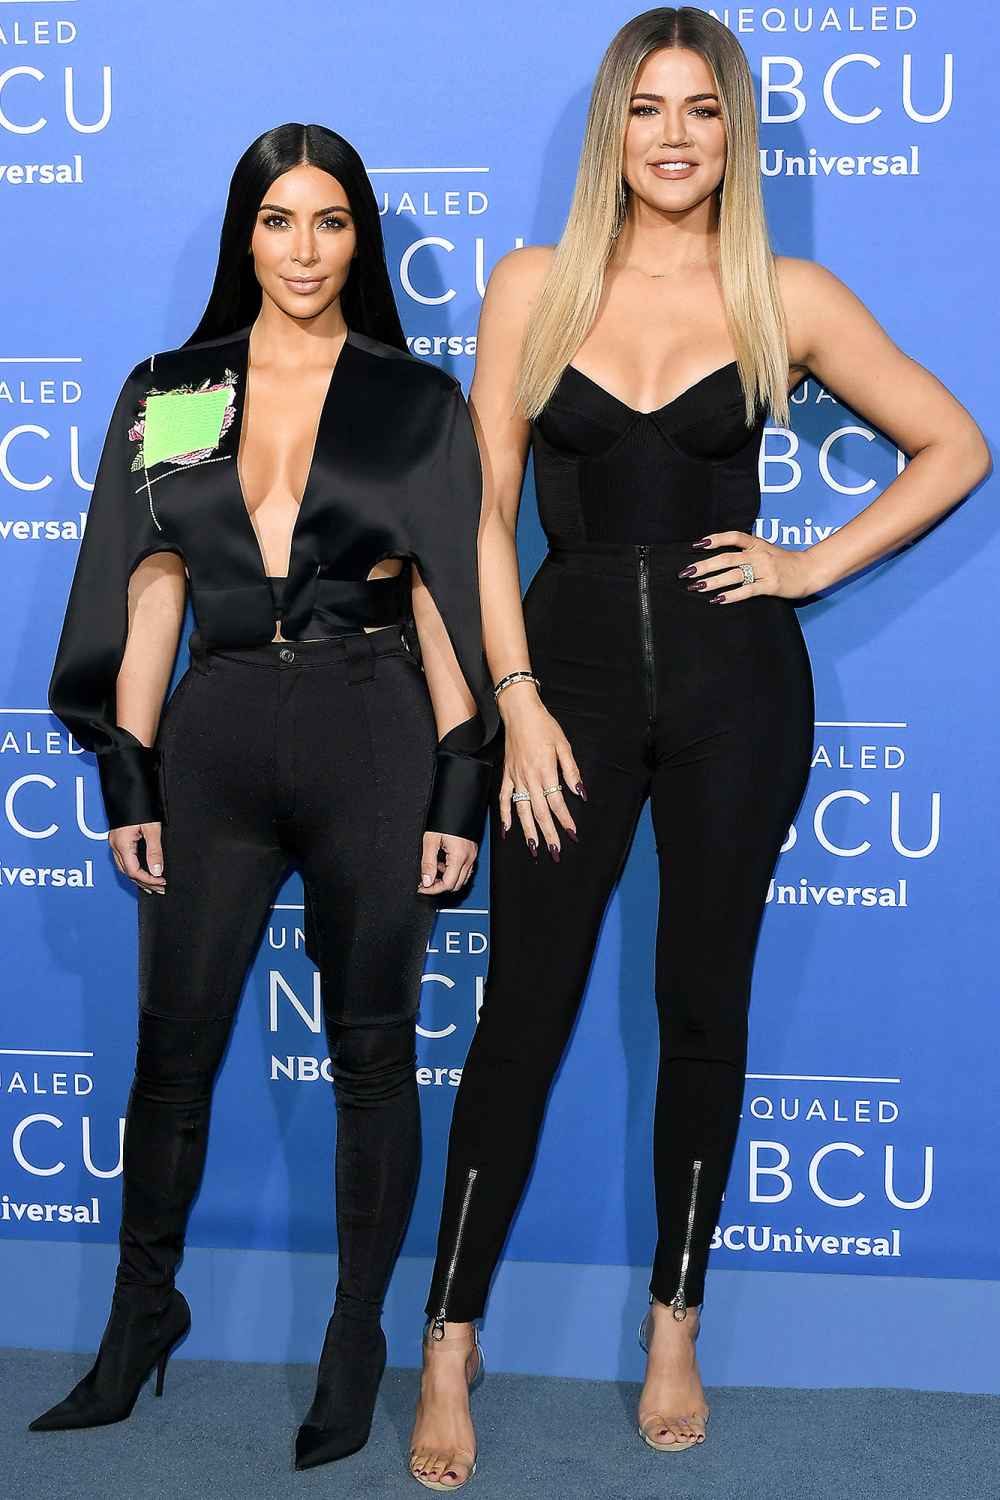 Khloe Kardashian Thanks Kim for ‘F--king on Camera’ to Make Family Famous